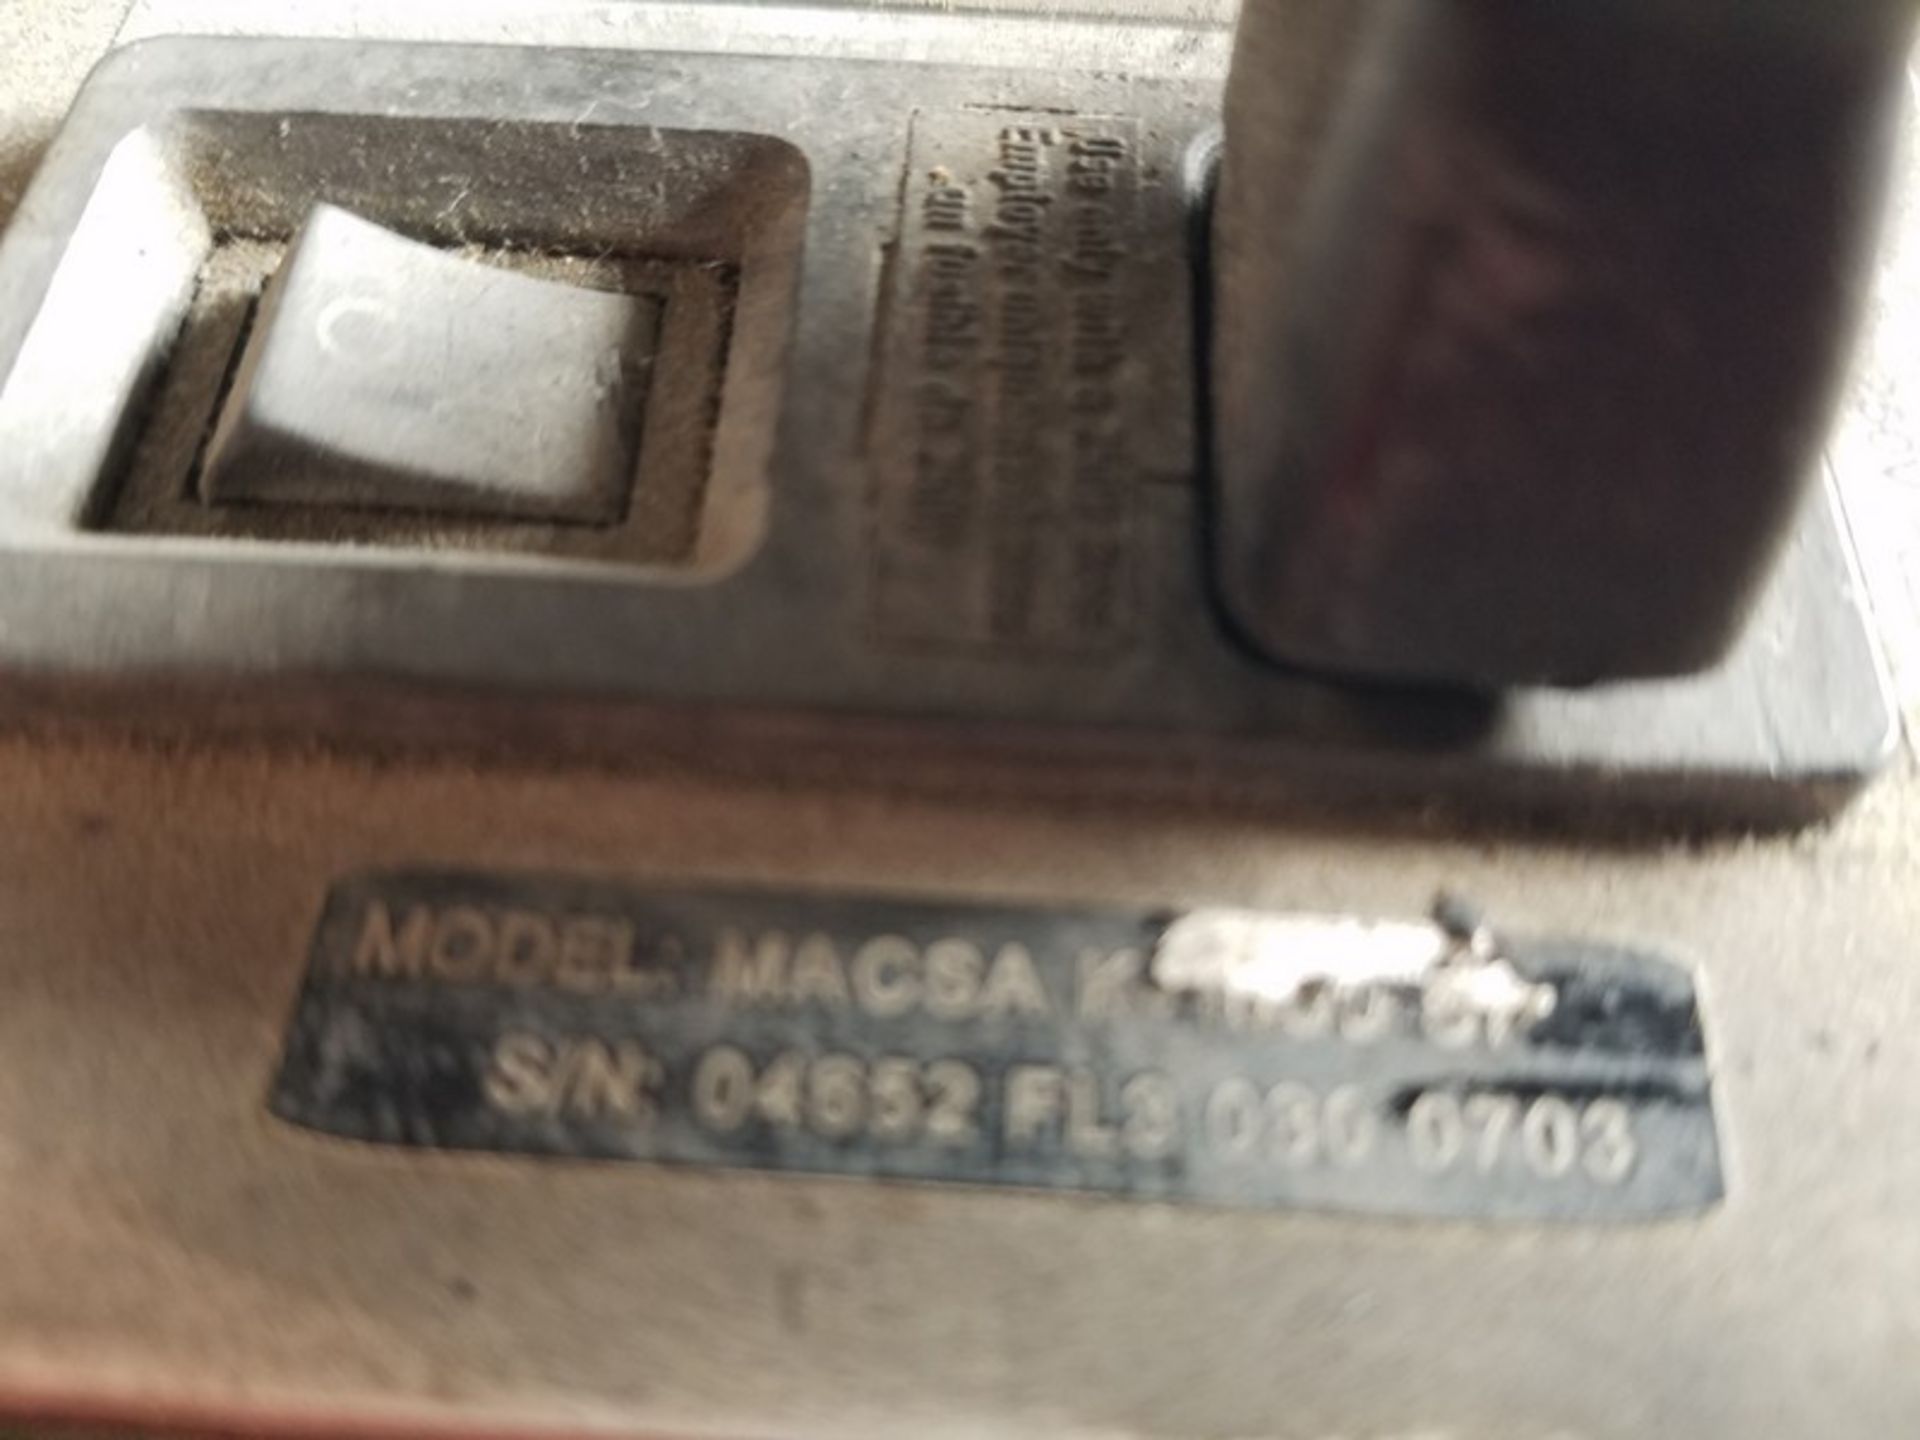 Macau Laser System, Model K-1030 SP, S/N 04652FL3030 0703, Volt 115 (Located Fort Worth, TX) ( - Image 5 of 5